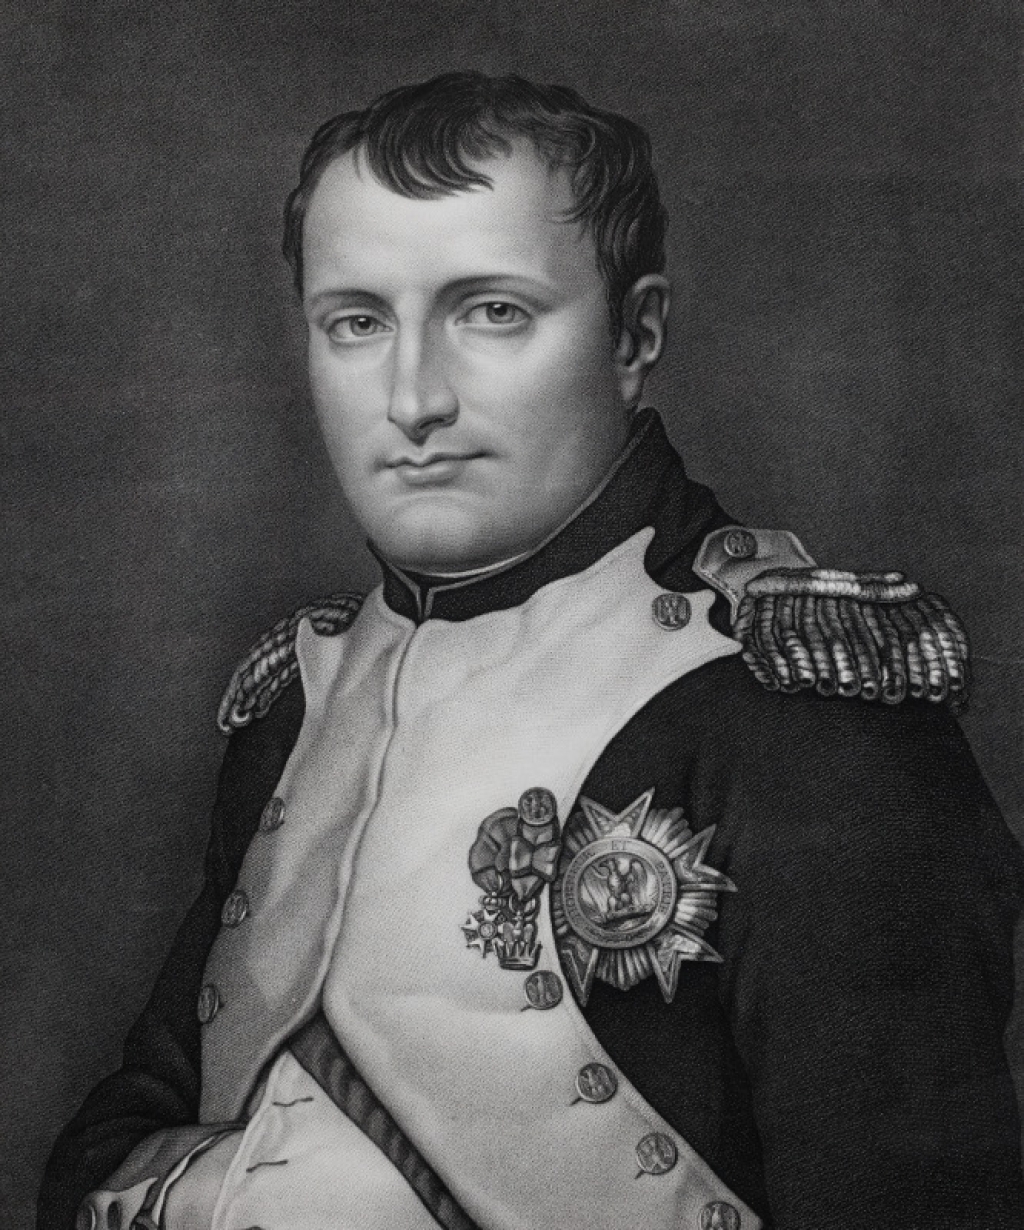 [akwatinta, ok. 1830] Portret Napoleona (wg. J-L. Davida)